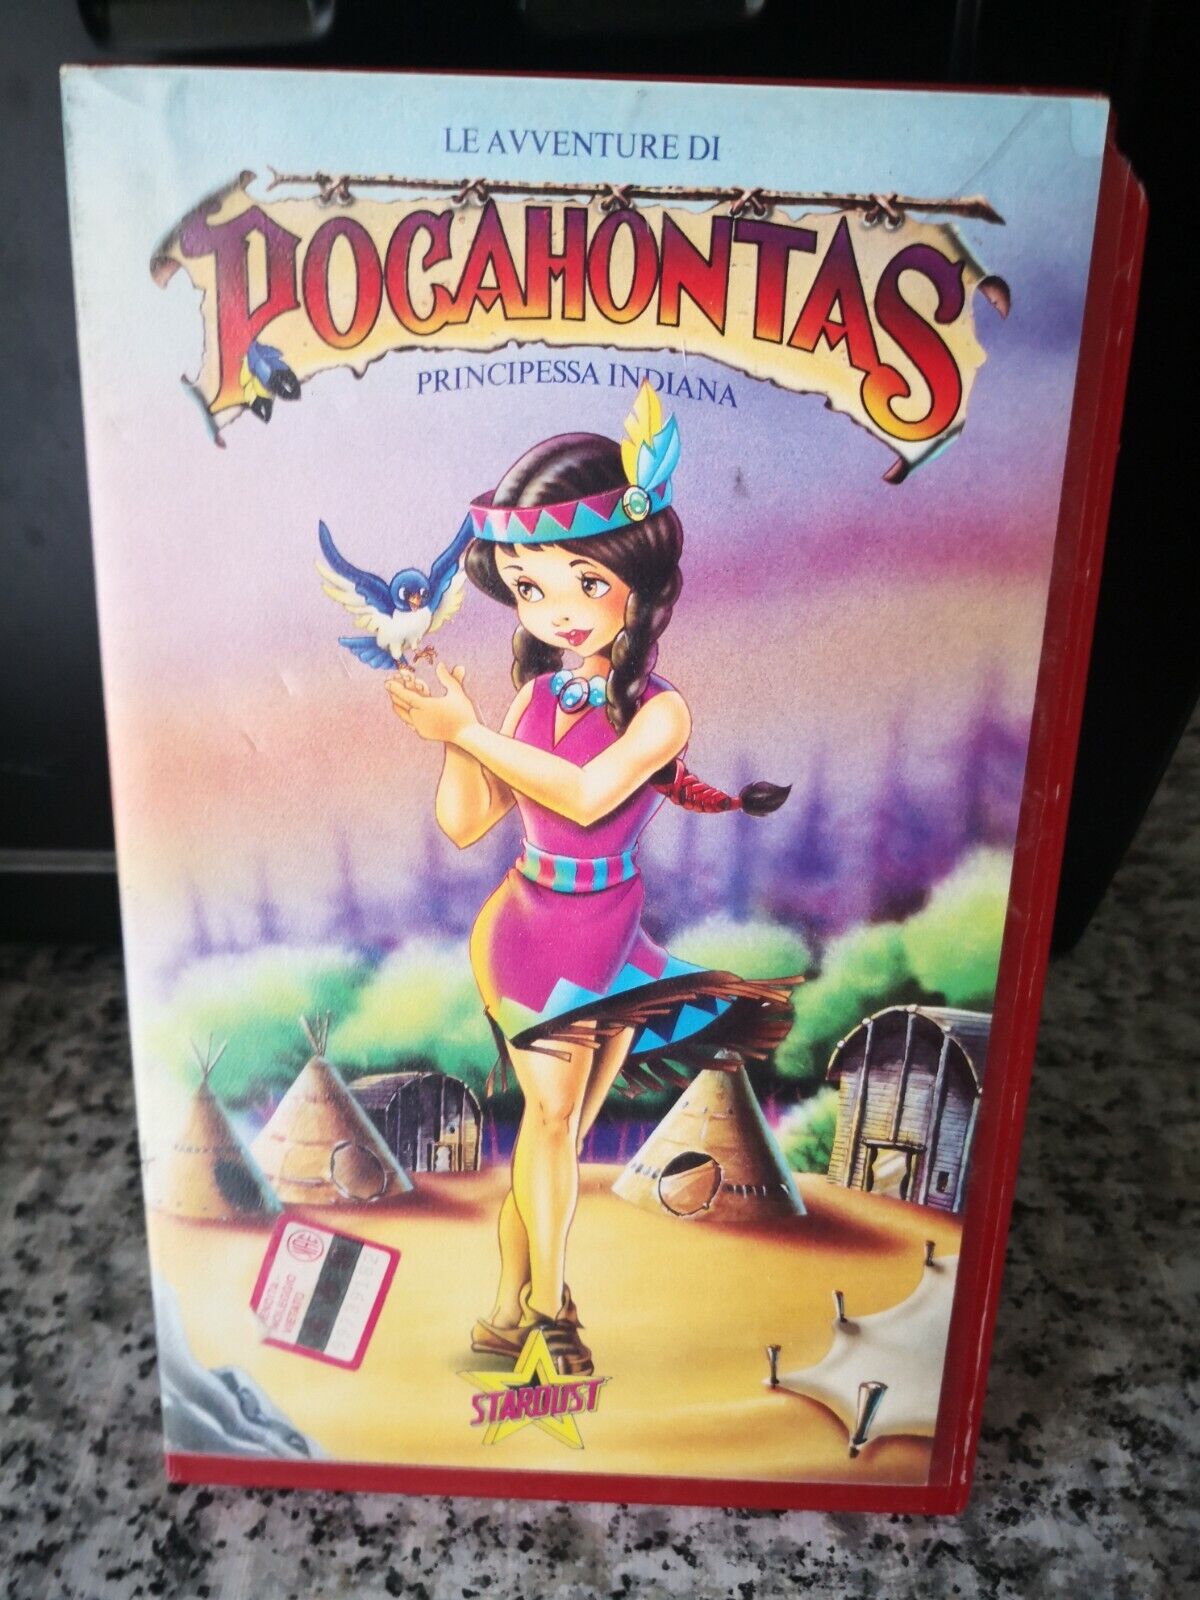 Le avventure di Pocahontas - Principessa indiana  VHS -1995 - stardust-F